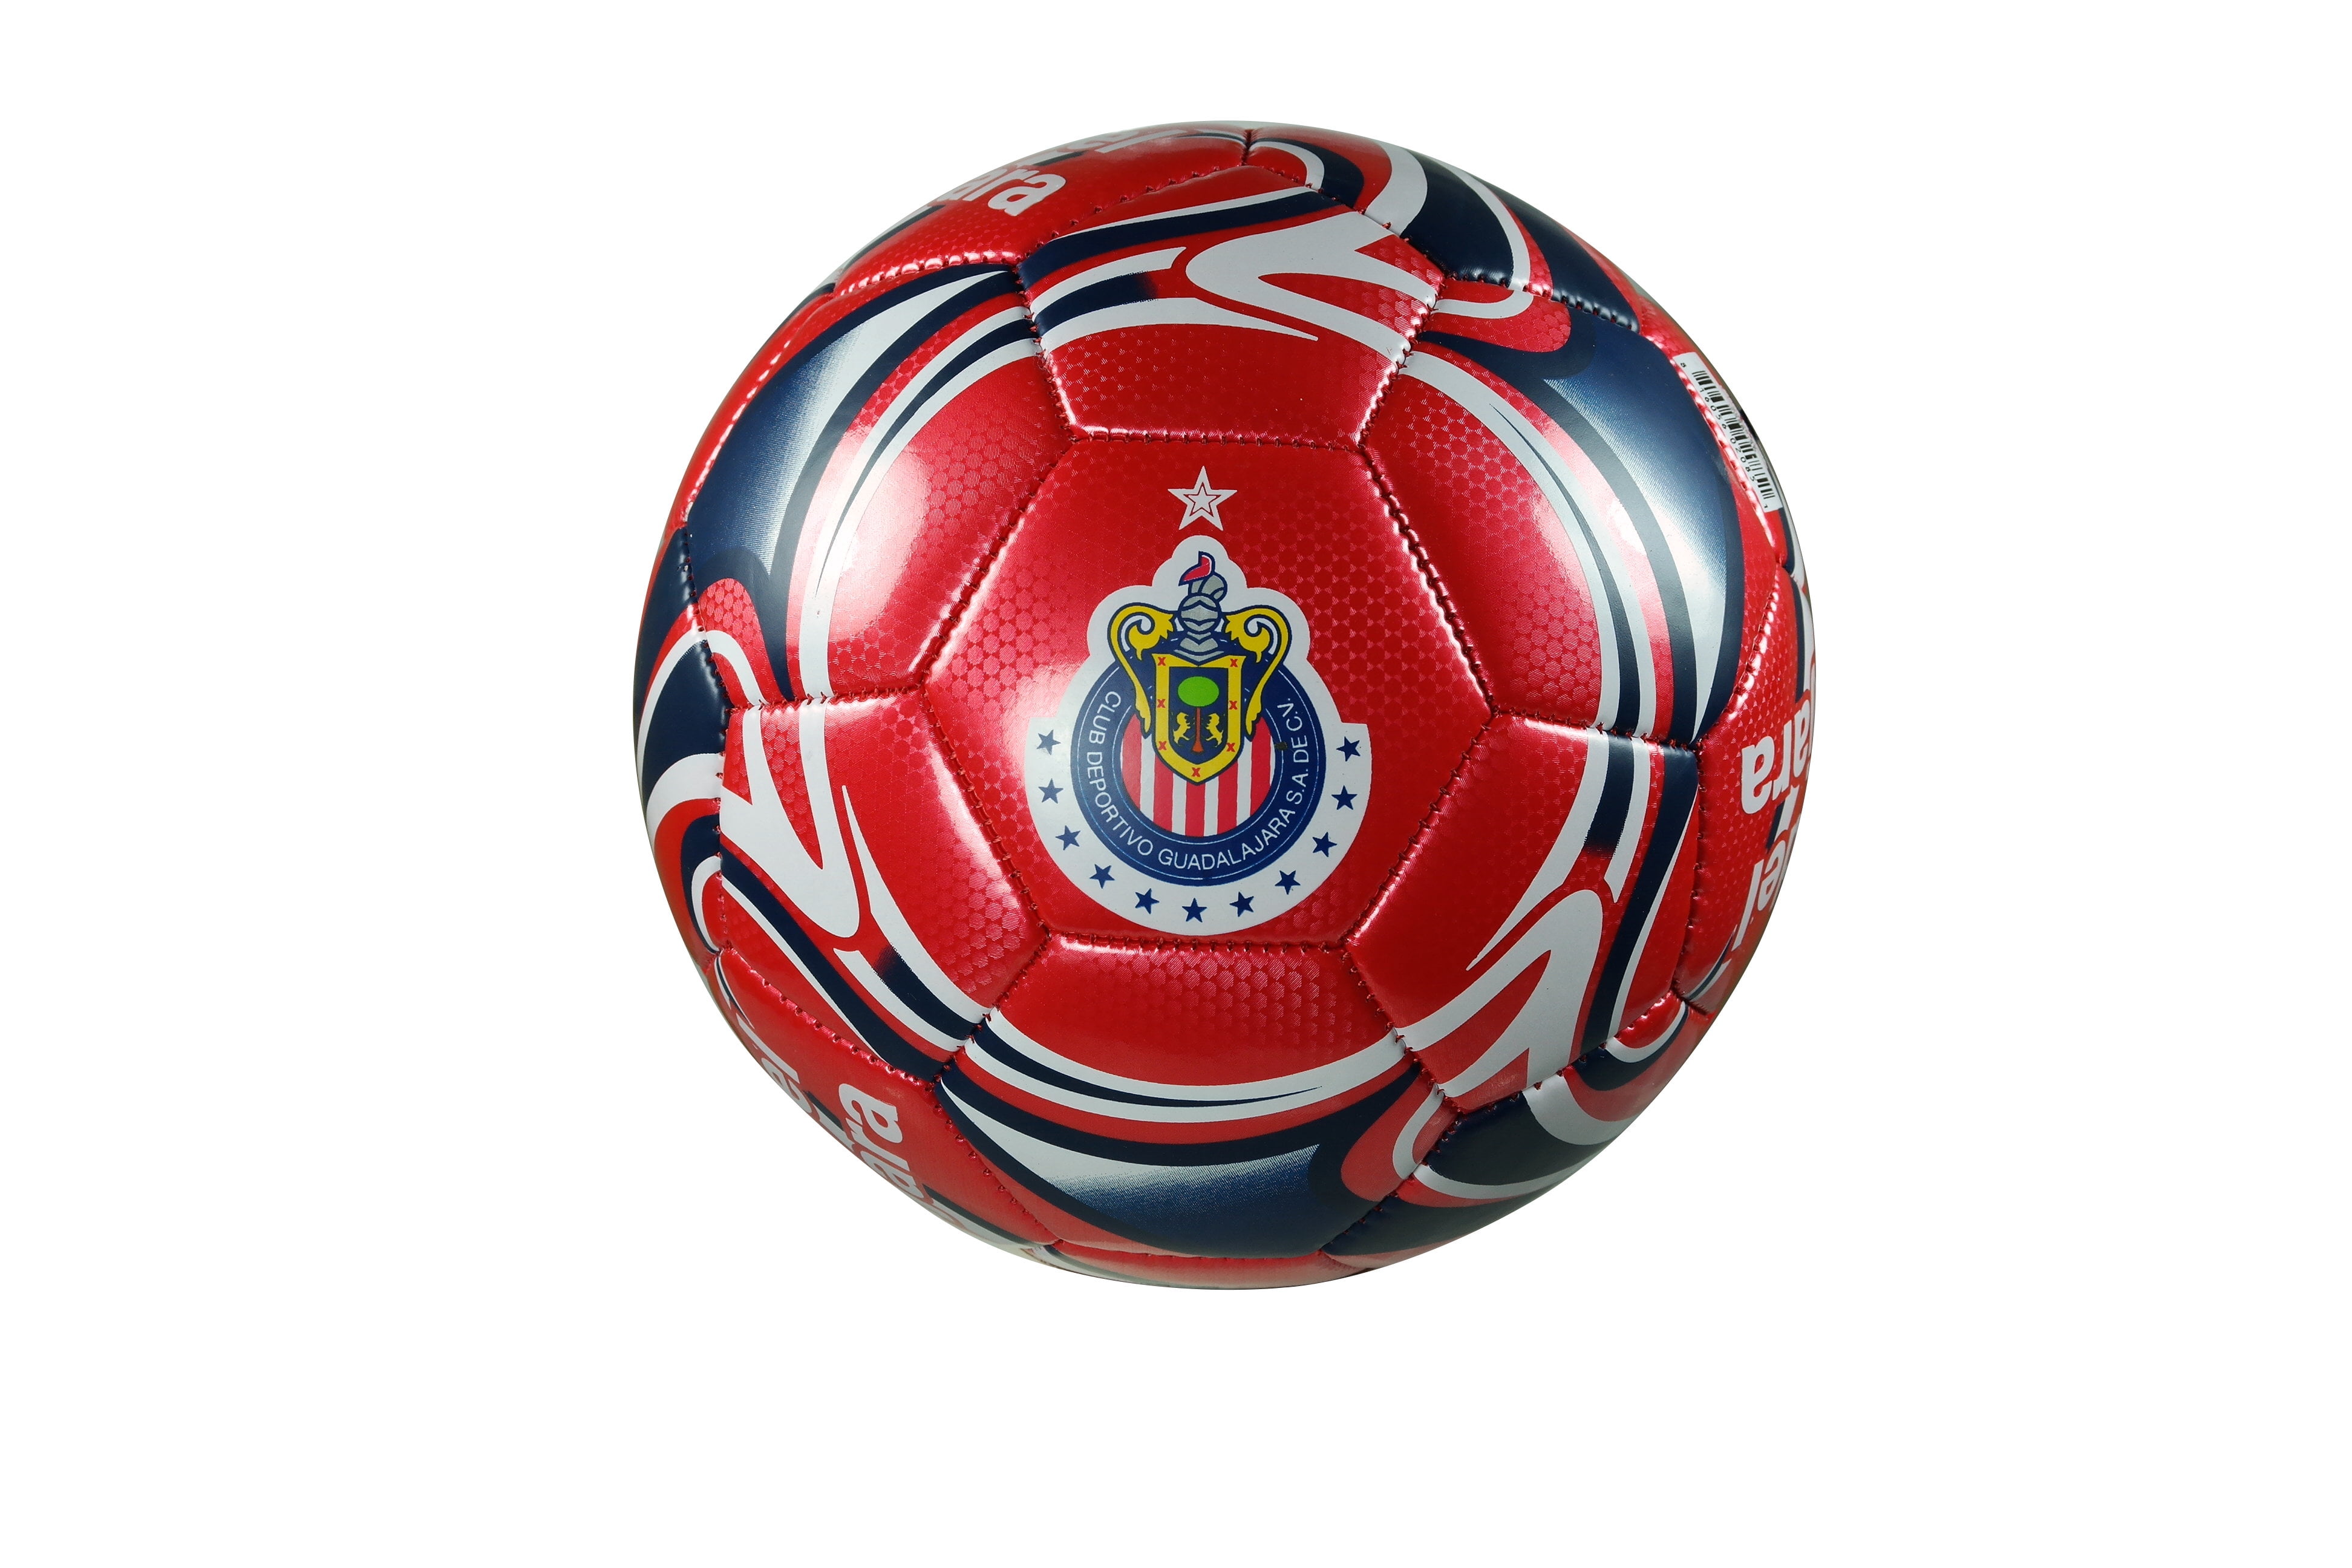 Chivas De Guadalajara Soccer Authentic Official Licensed Soccer Ball Size 5-002 